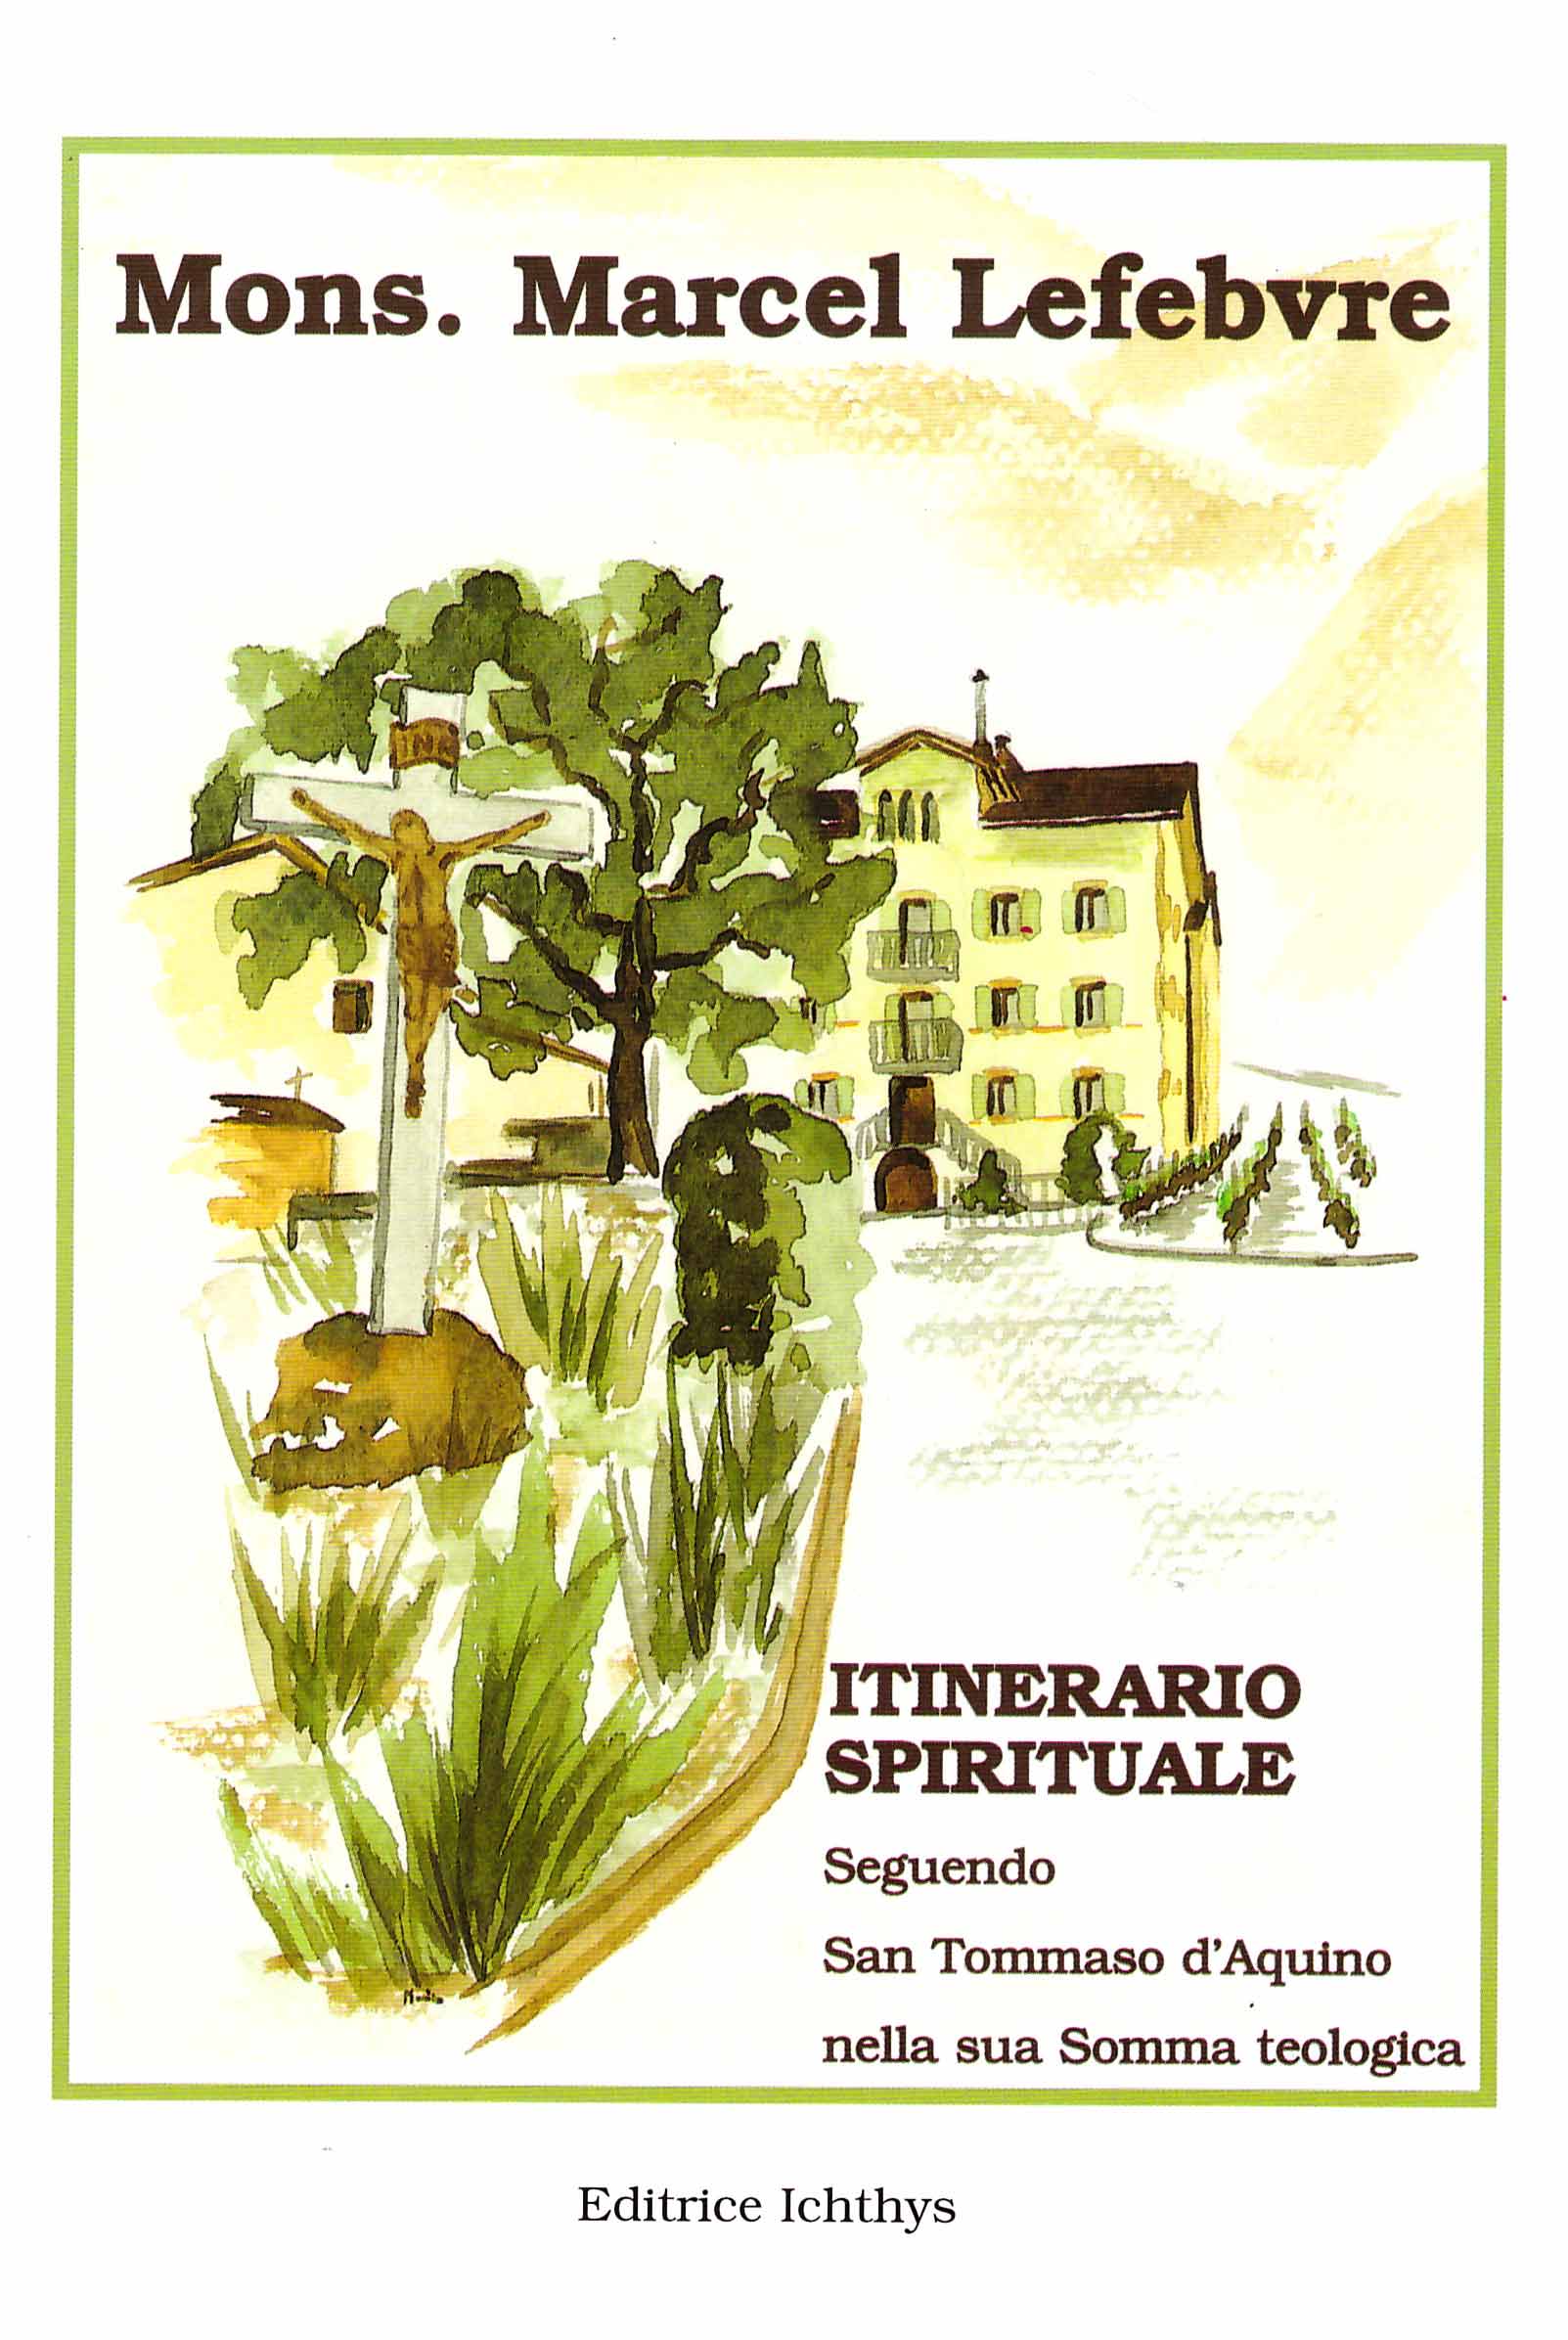 Copertina libro Itinerario Spirituale